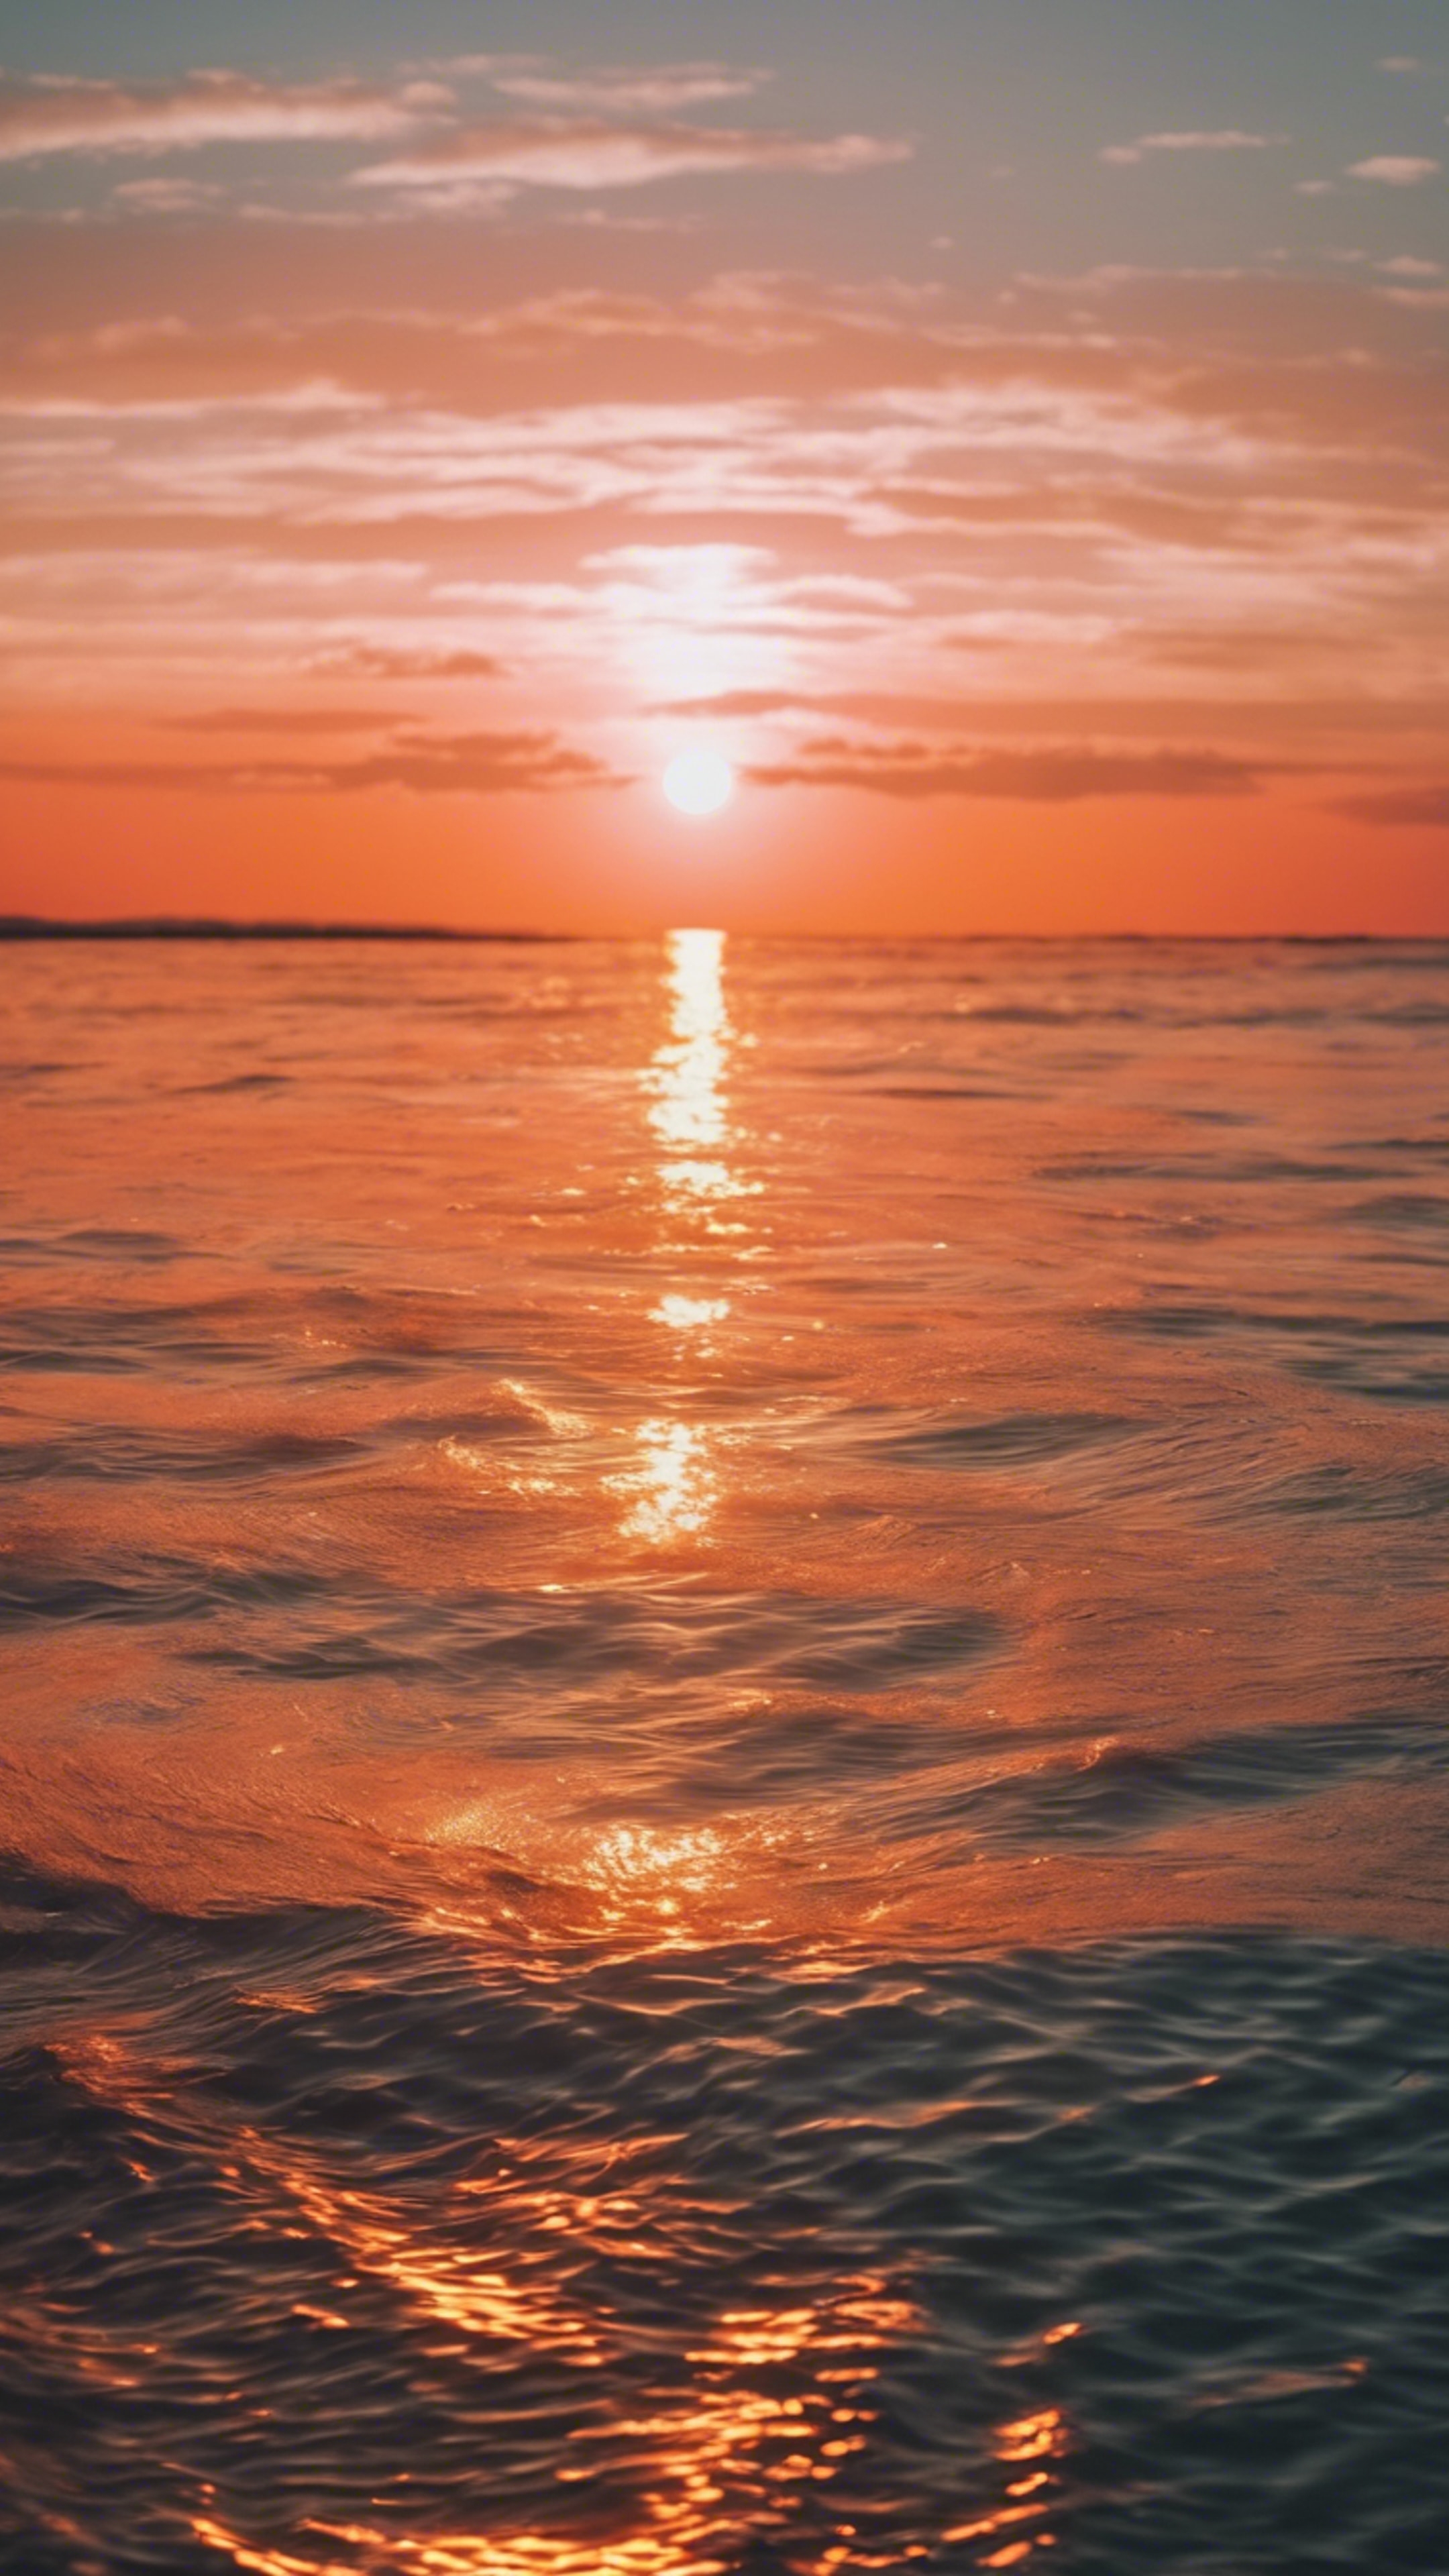 Bright neon orange sun setting over a calm sea. Tapéta[6f90c626ce0243a7b617]